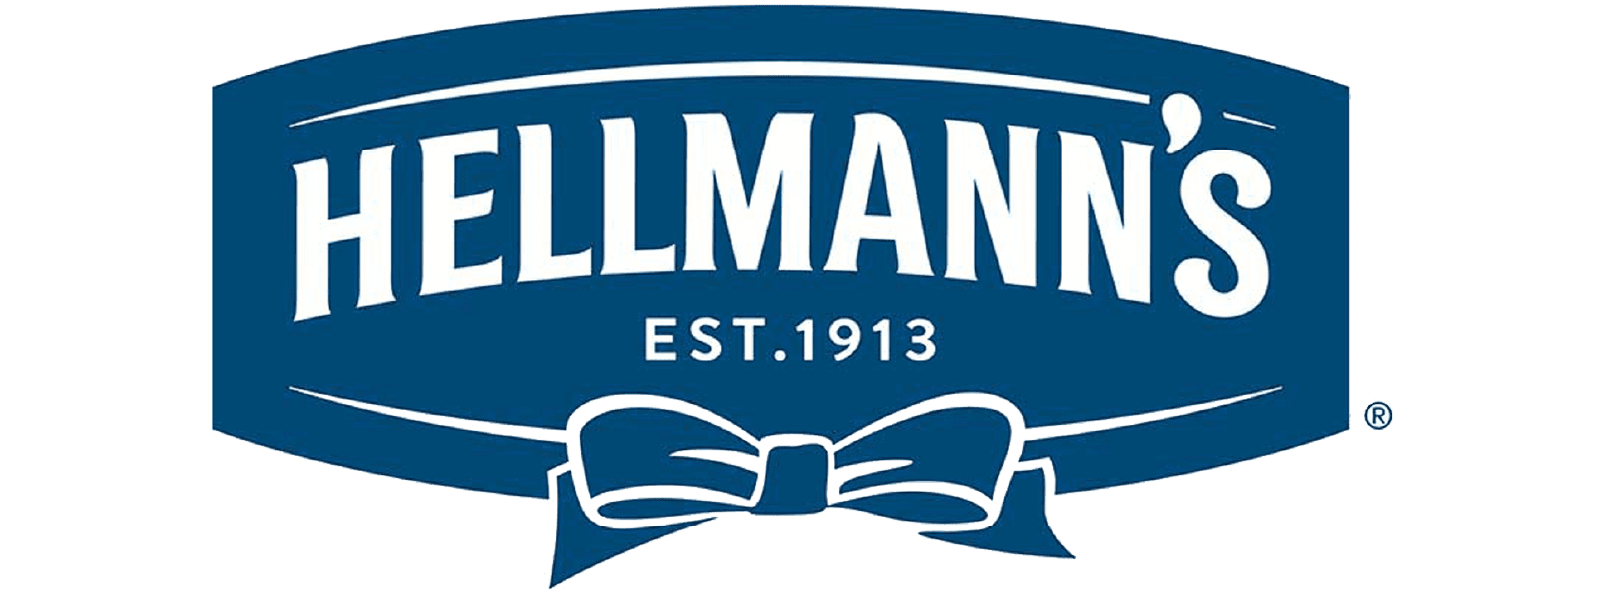 Hellmann's logo